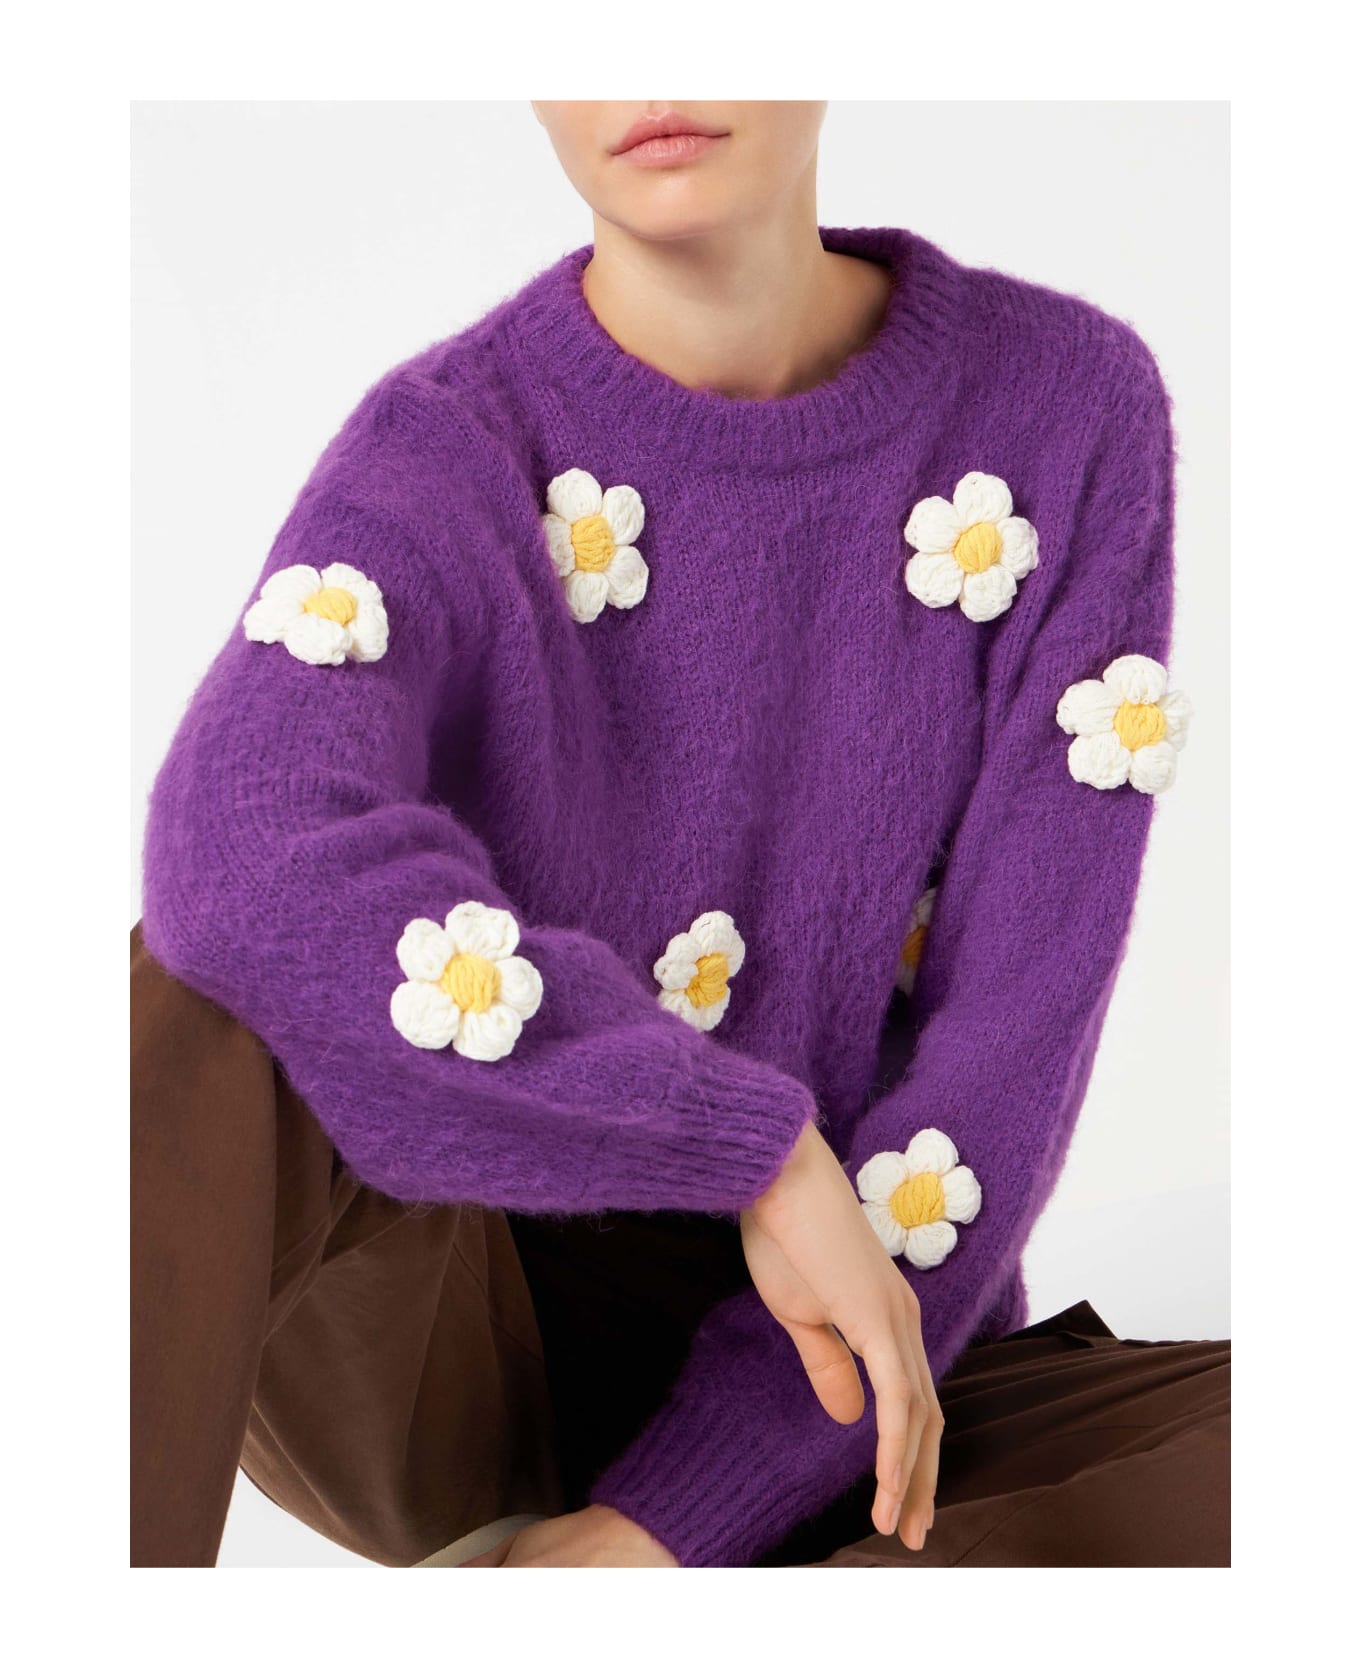 MC2 Saint Barth Woman Brushed Crewneck Sweater With Daisy Appliqué - PURPLE ニットウェア